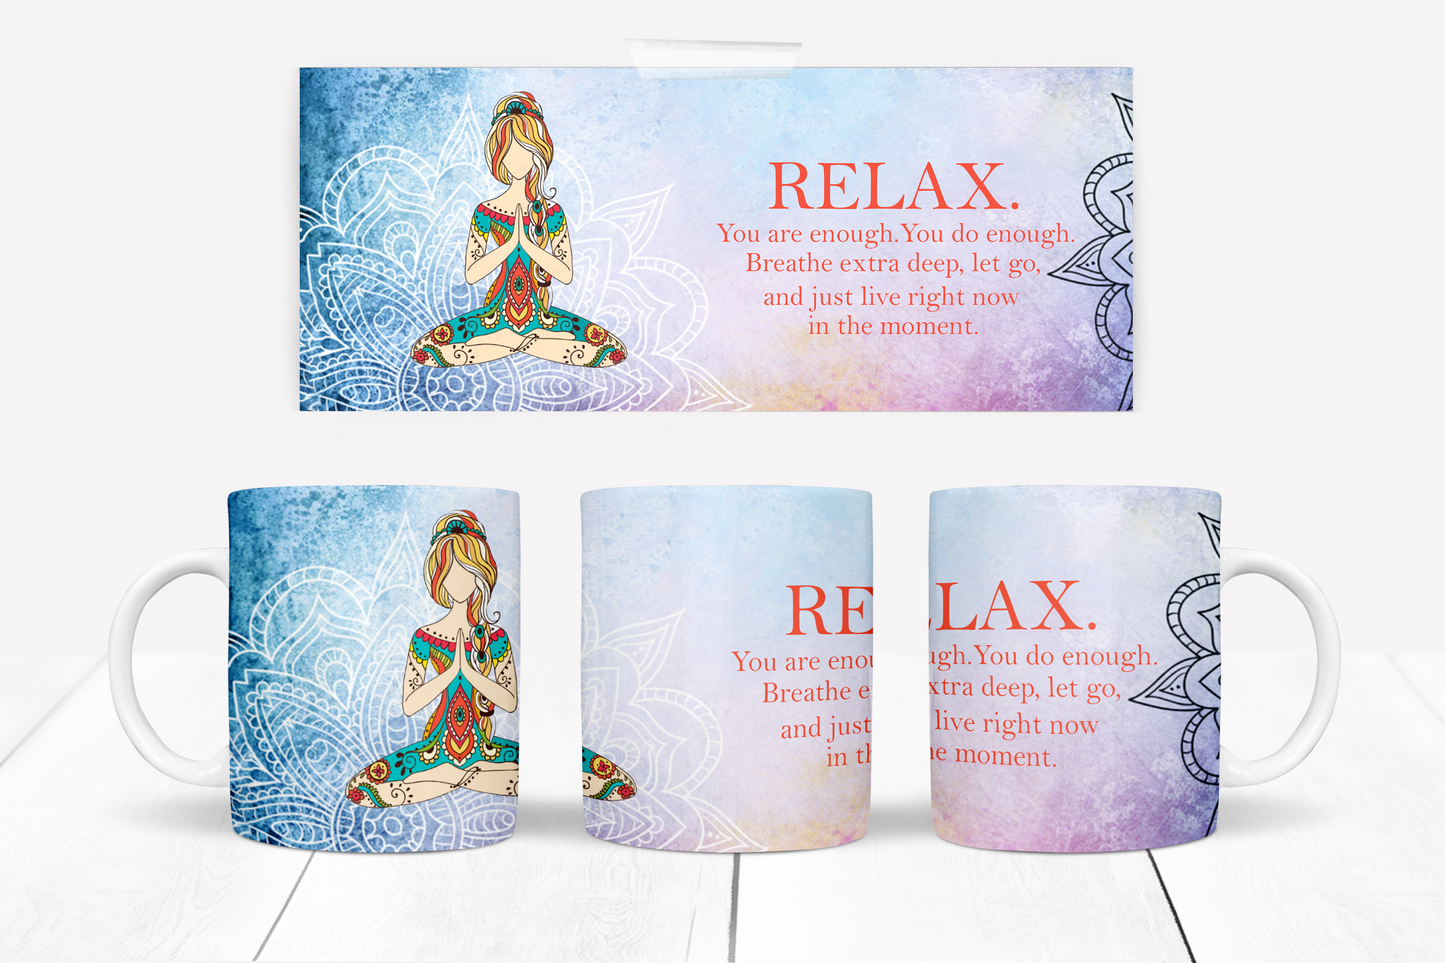  Relax Meditation Coffee Mug by Free Spirit Accessories sold by Free Spirit Accessories